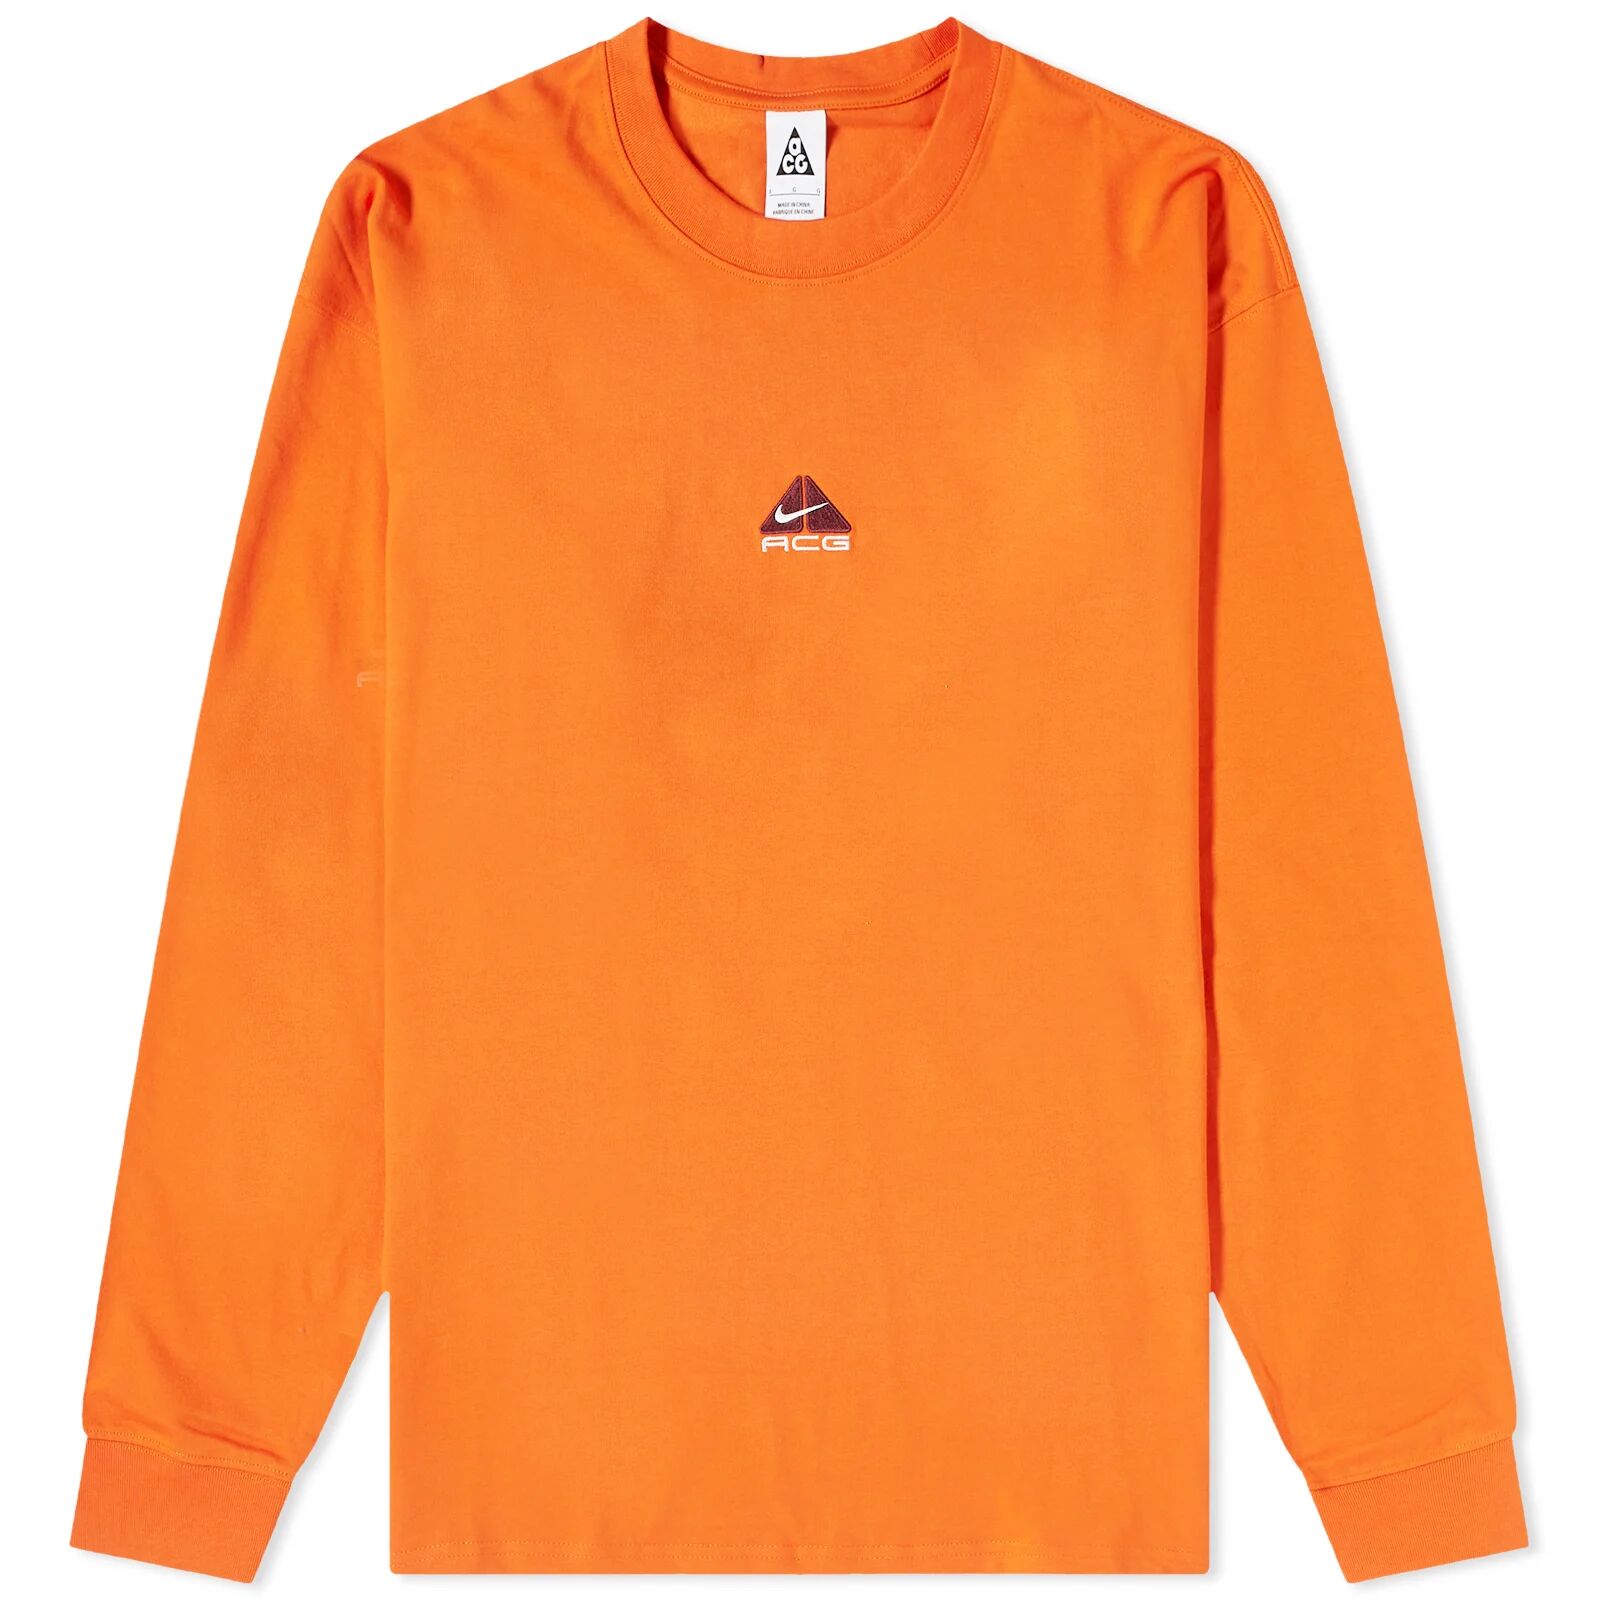 Nike Men's Acg Lungs T-Shirt in Campfire Orange/Summit White, Size Medium